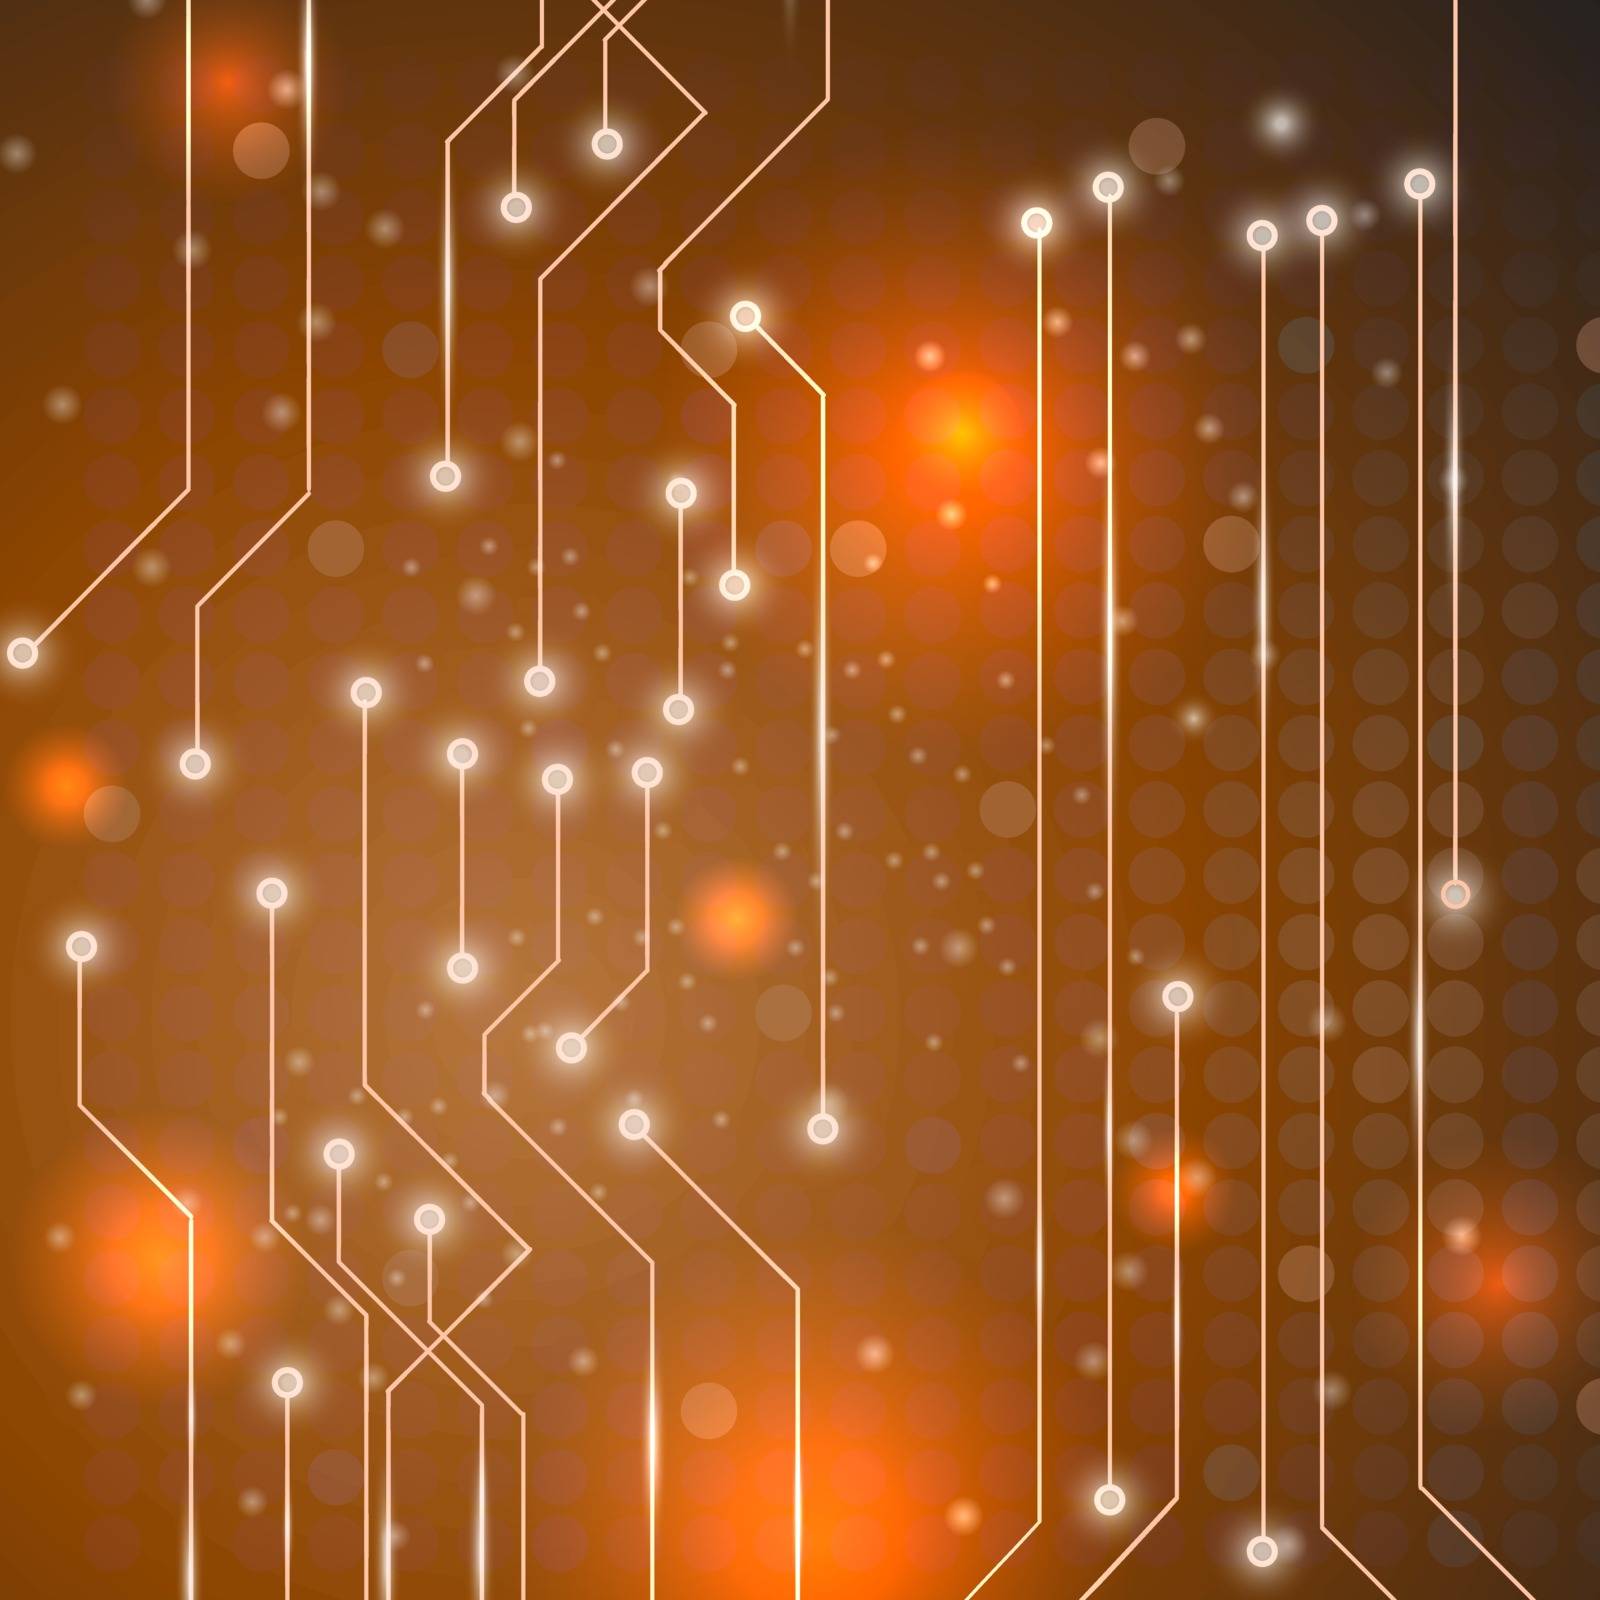 Modern Computer Technology Orange Background. Circuit Board Pattern. High Tech Printed Circuit Board